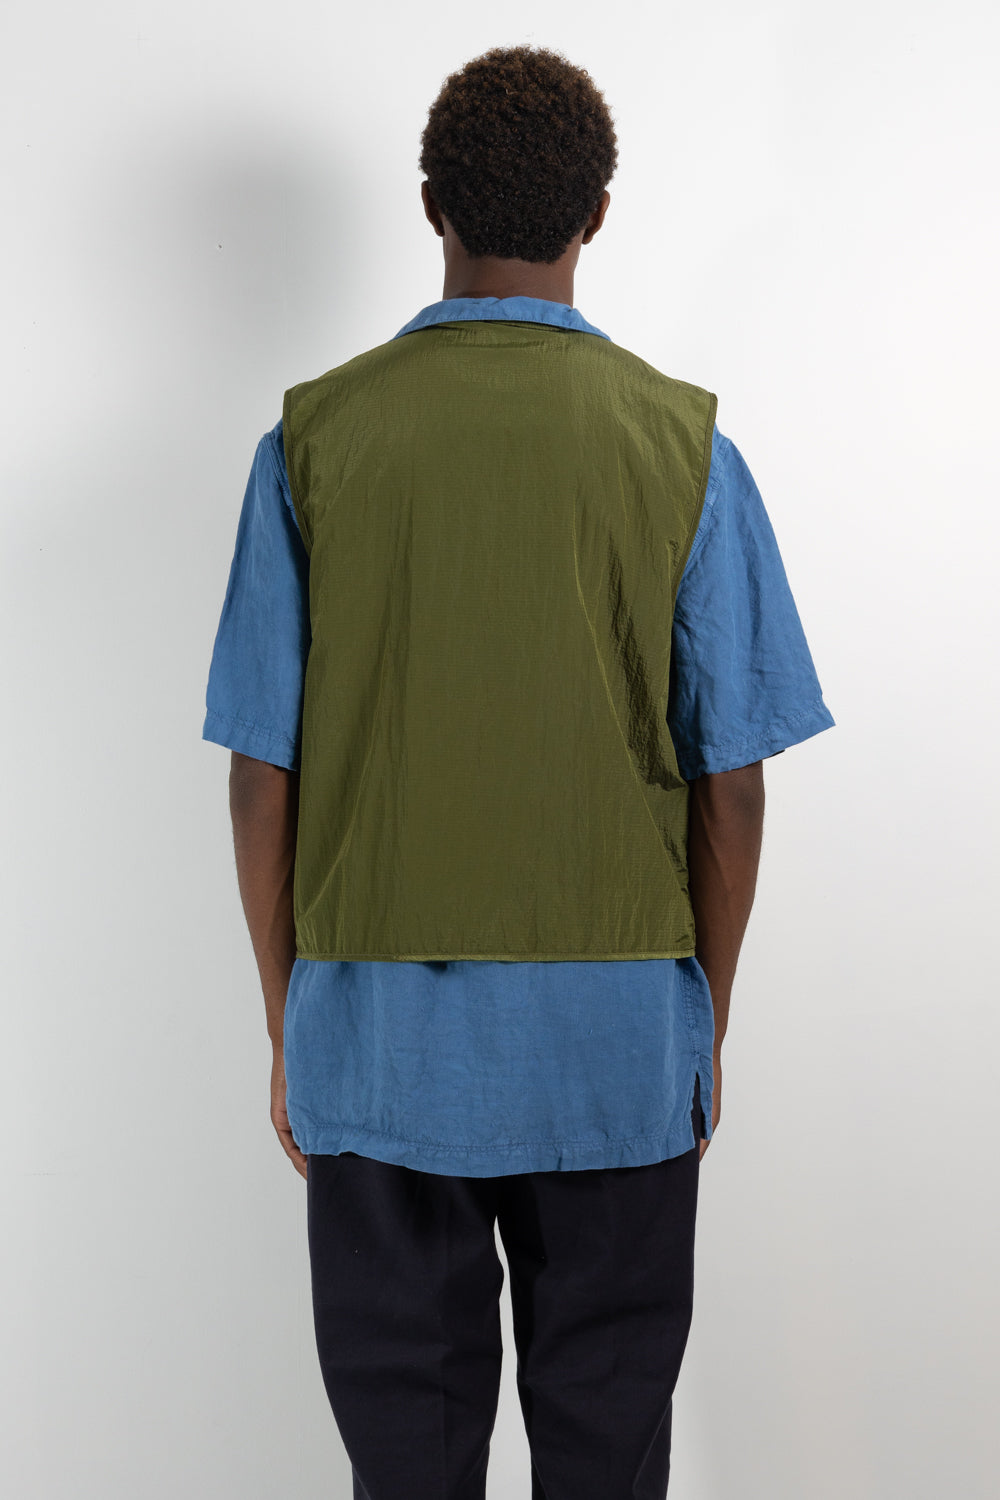 Mens Jacket | East Harbour Surplus Winston Fishing Vest | The Standard Store